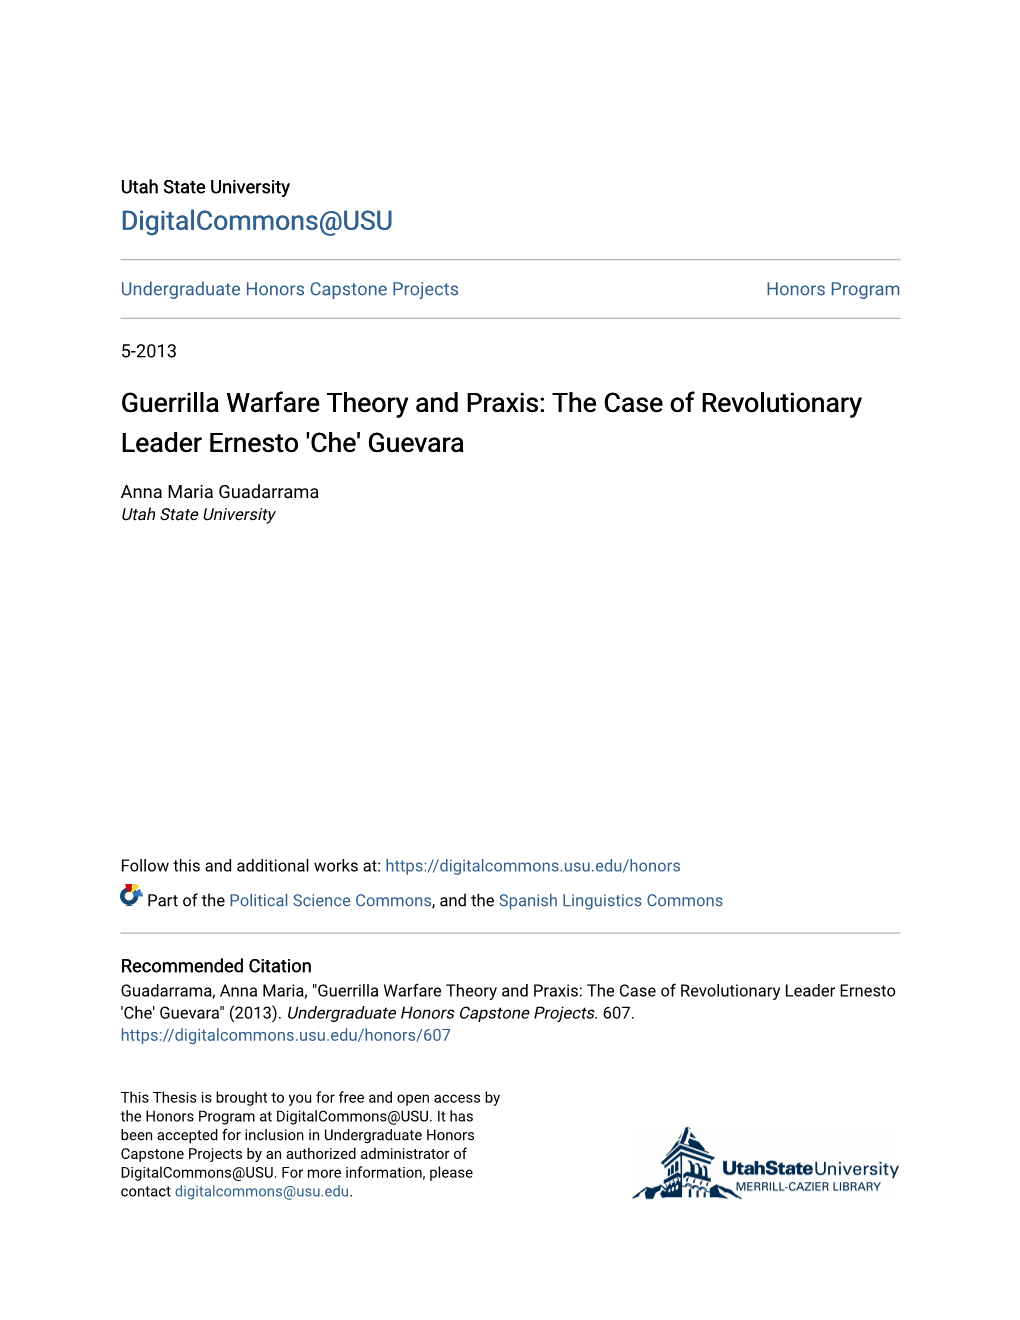 Guerrilla Warfare Theory and Praxis: the Case of Revolutionary Leader Ernesto 'Che' Guevara